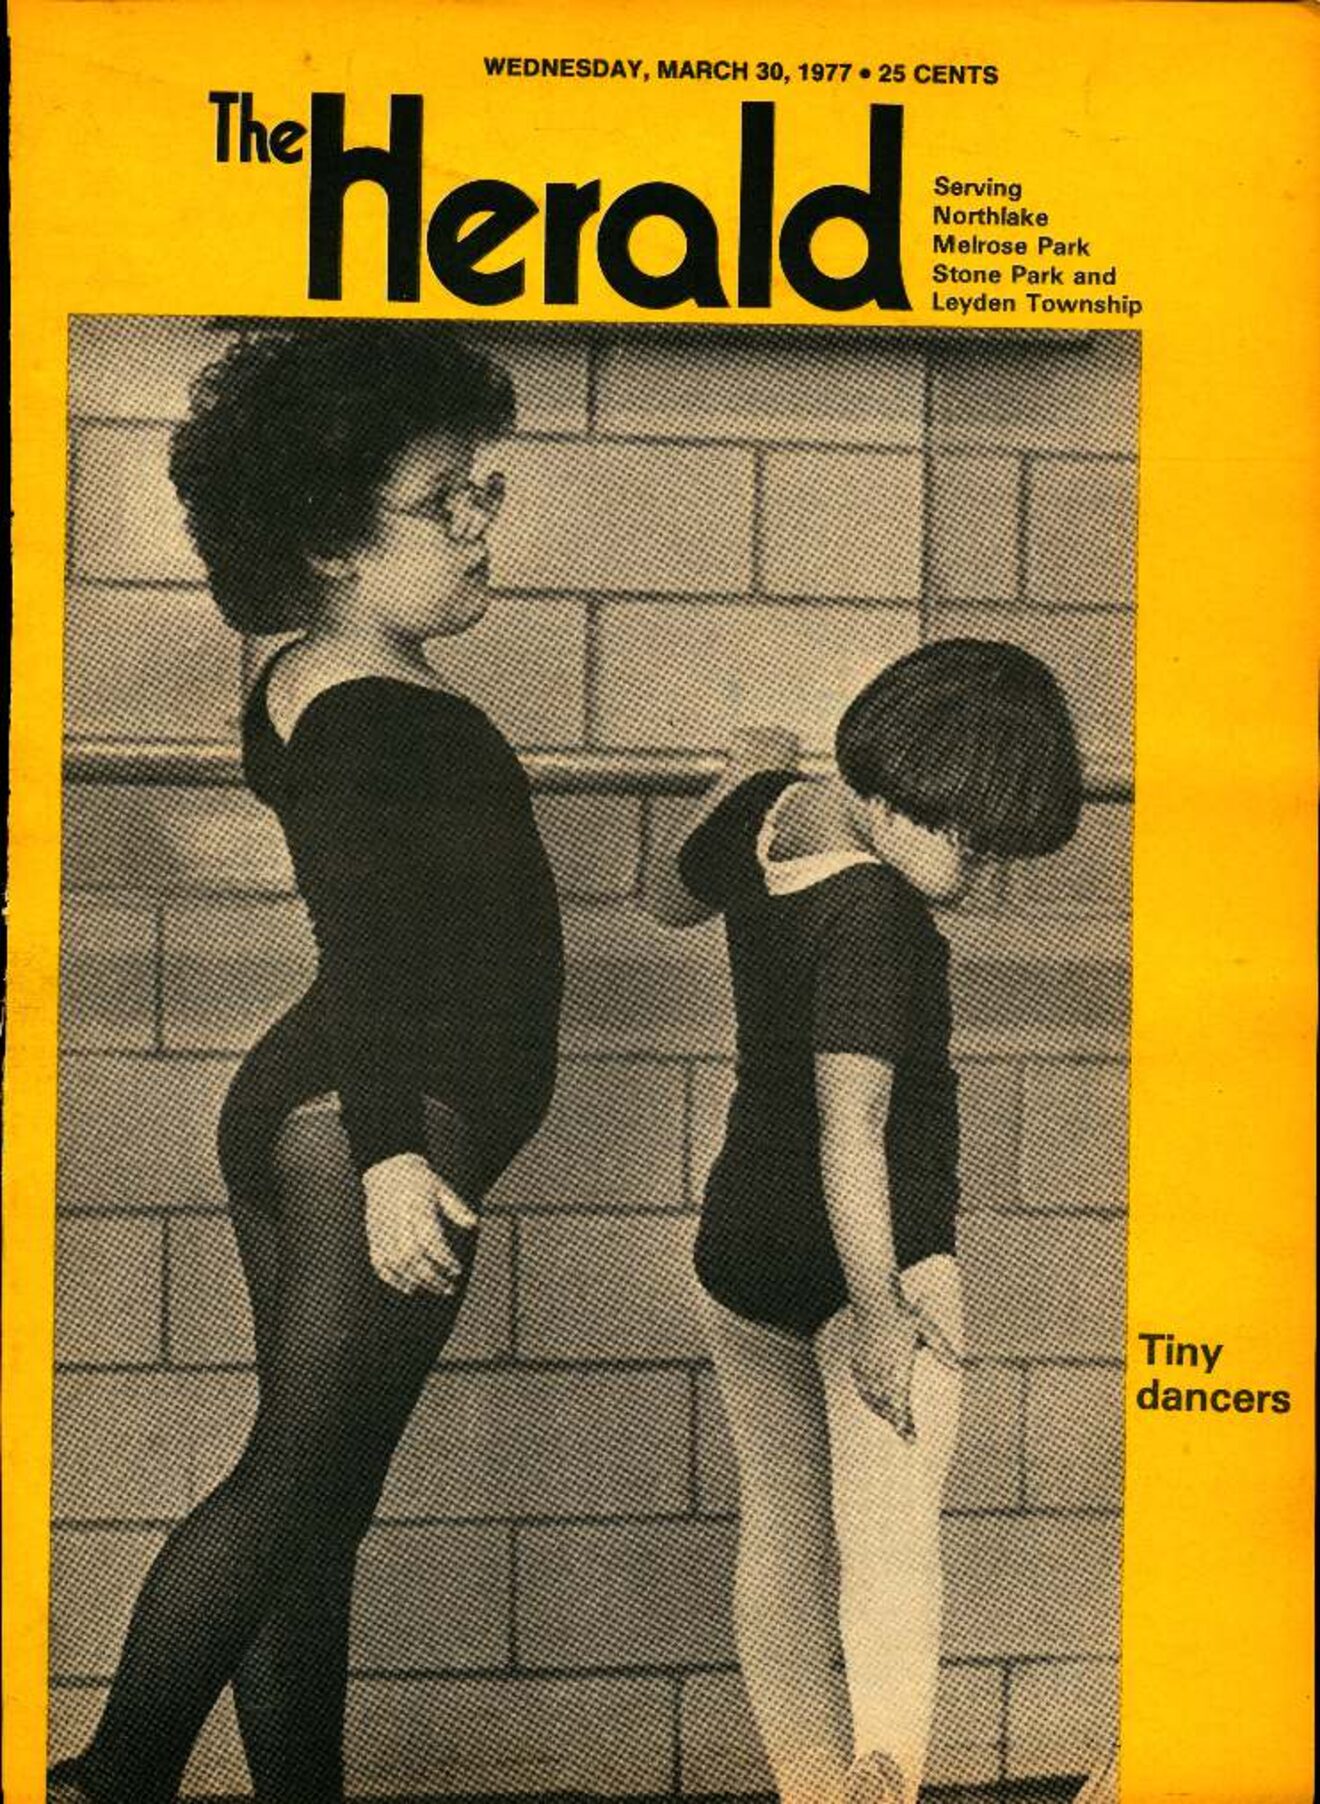 The Herald – 19770330